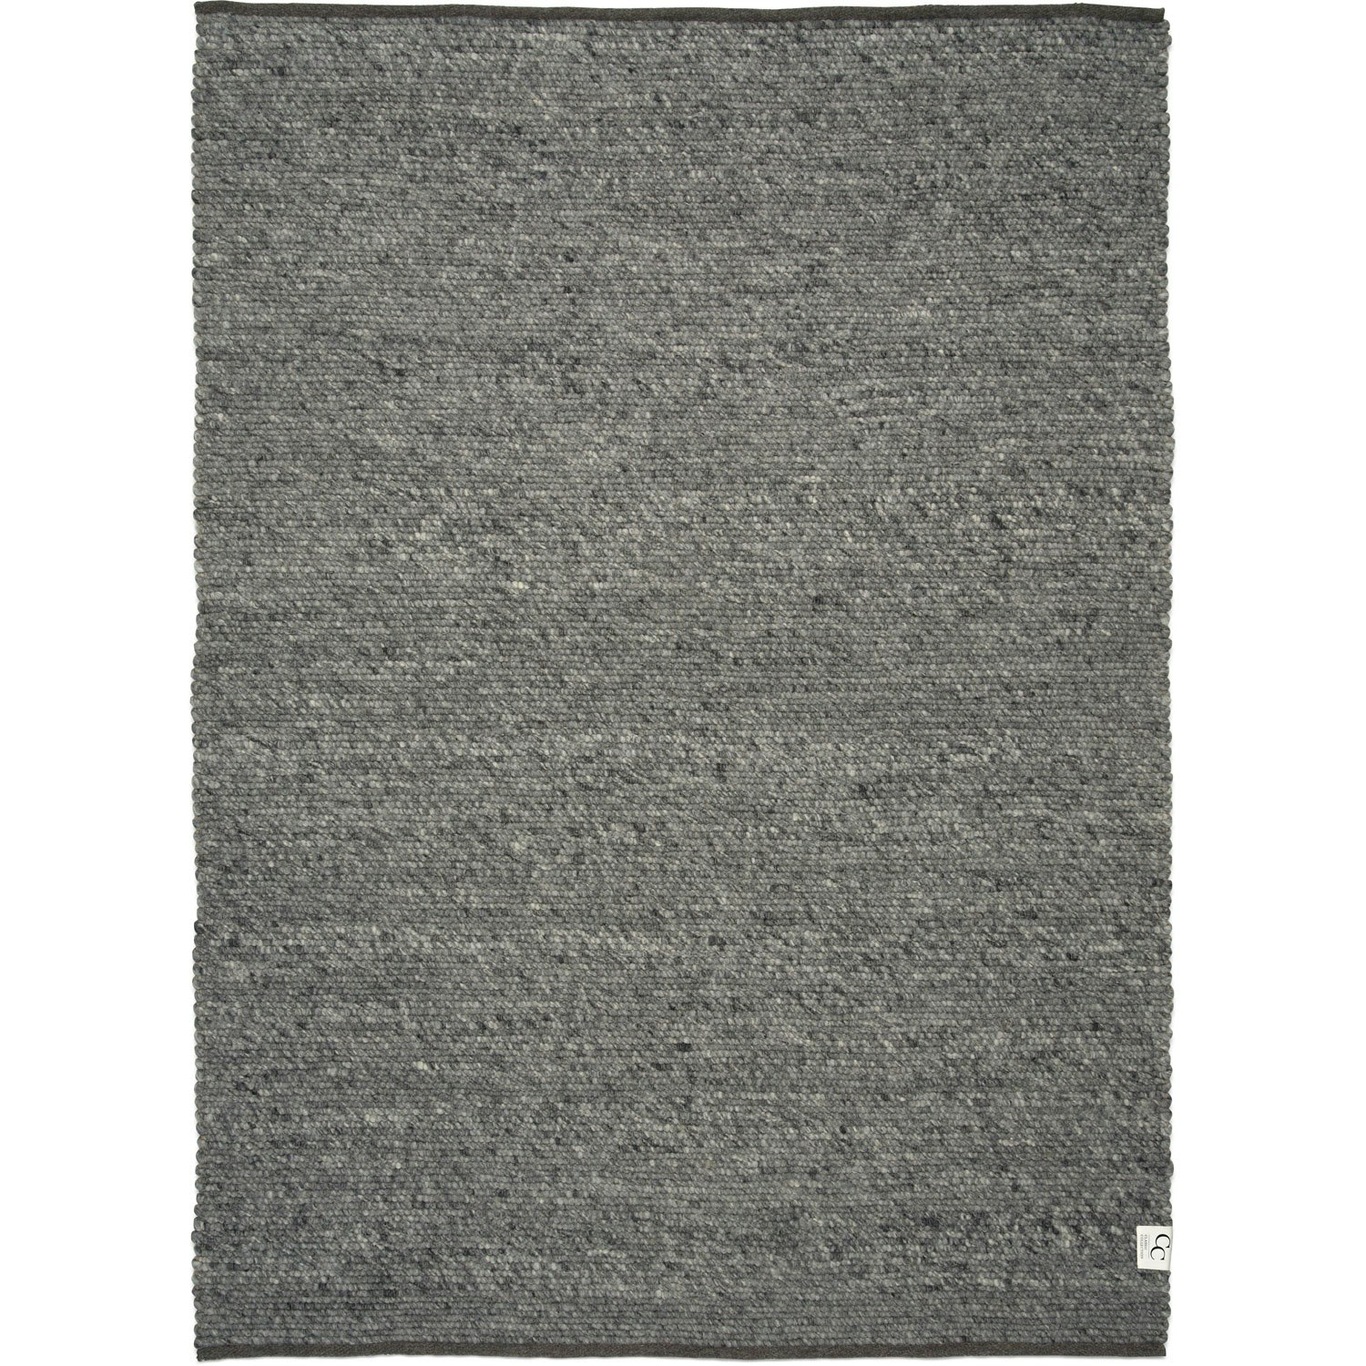 Merino Rug 170x230 cm, Granite